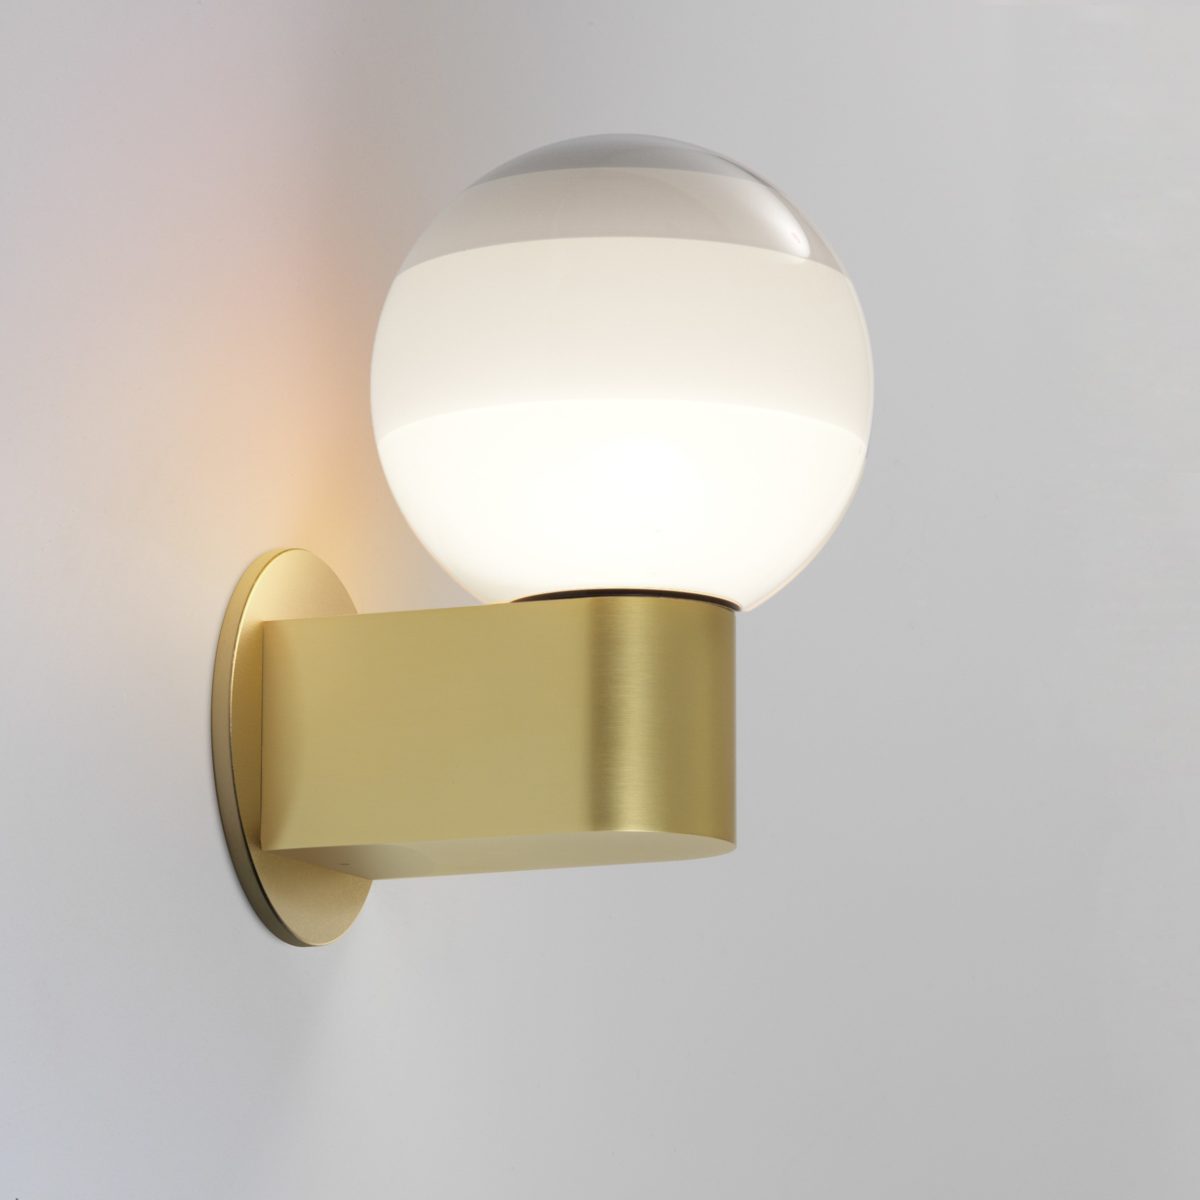 Buy Dipping Light lamp an Indoor Wall light fixture - Marset USA